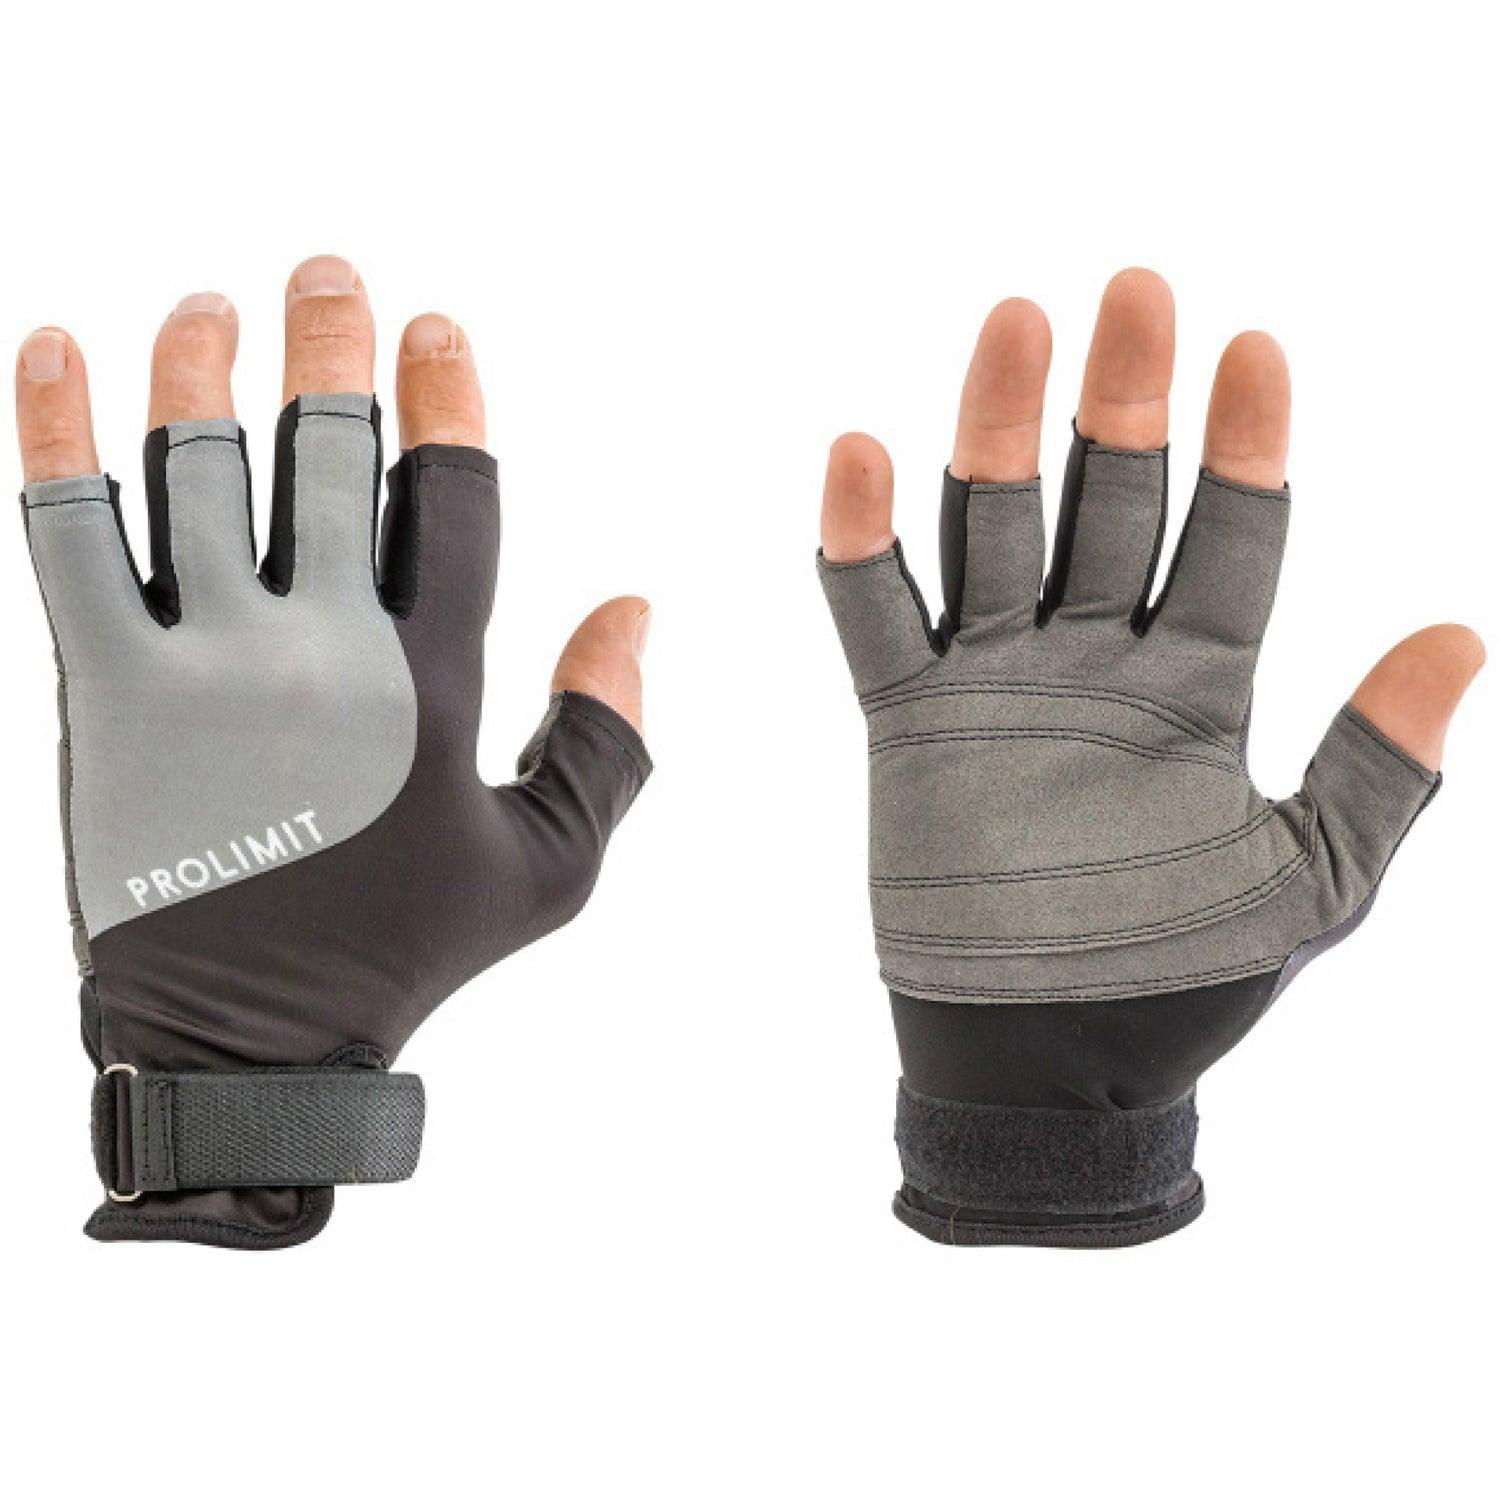 Prolimit Lycra summer gloves